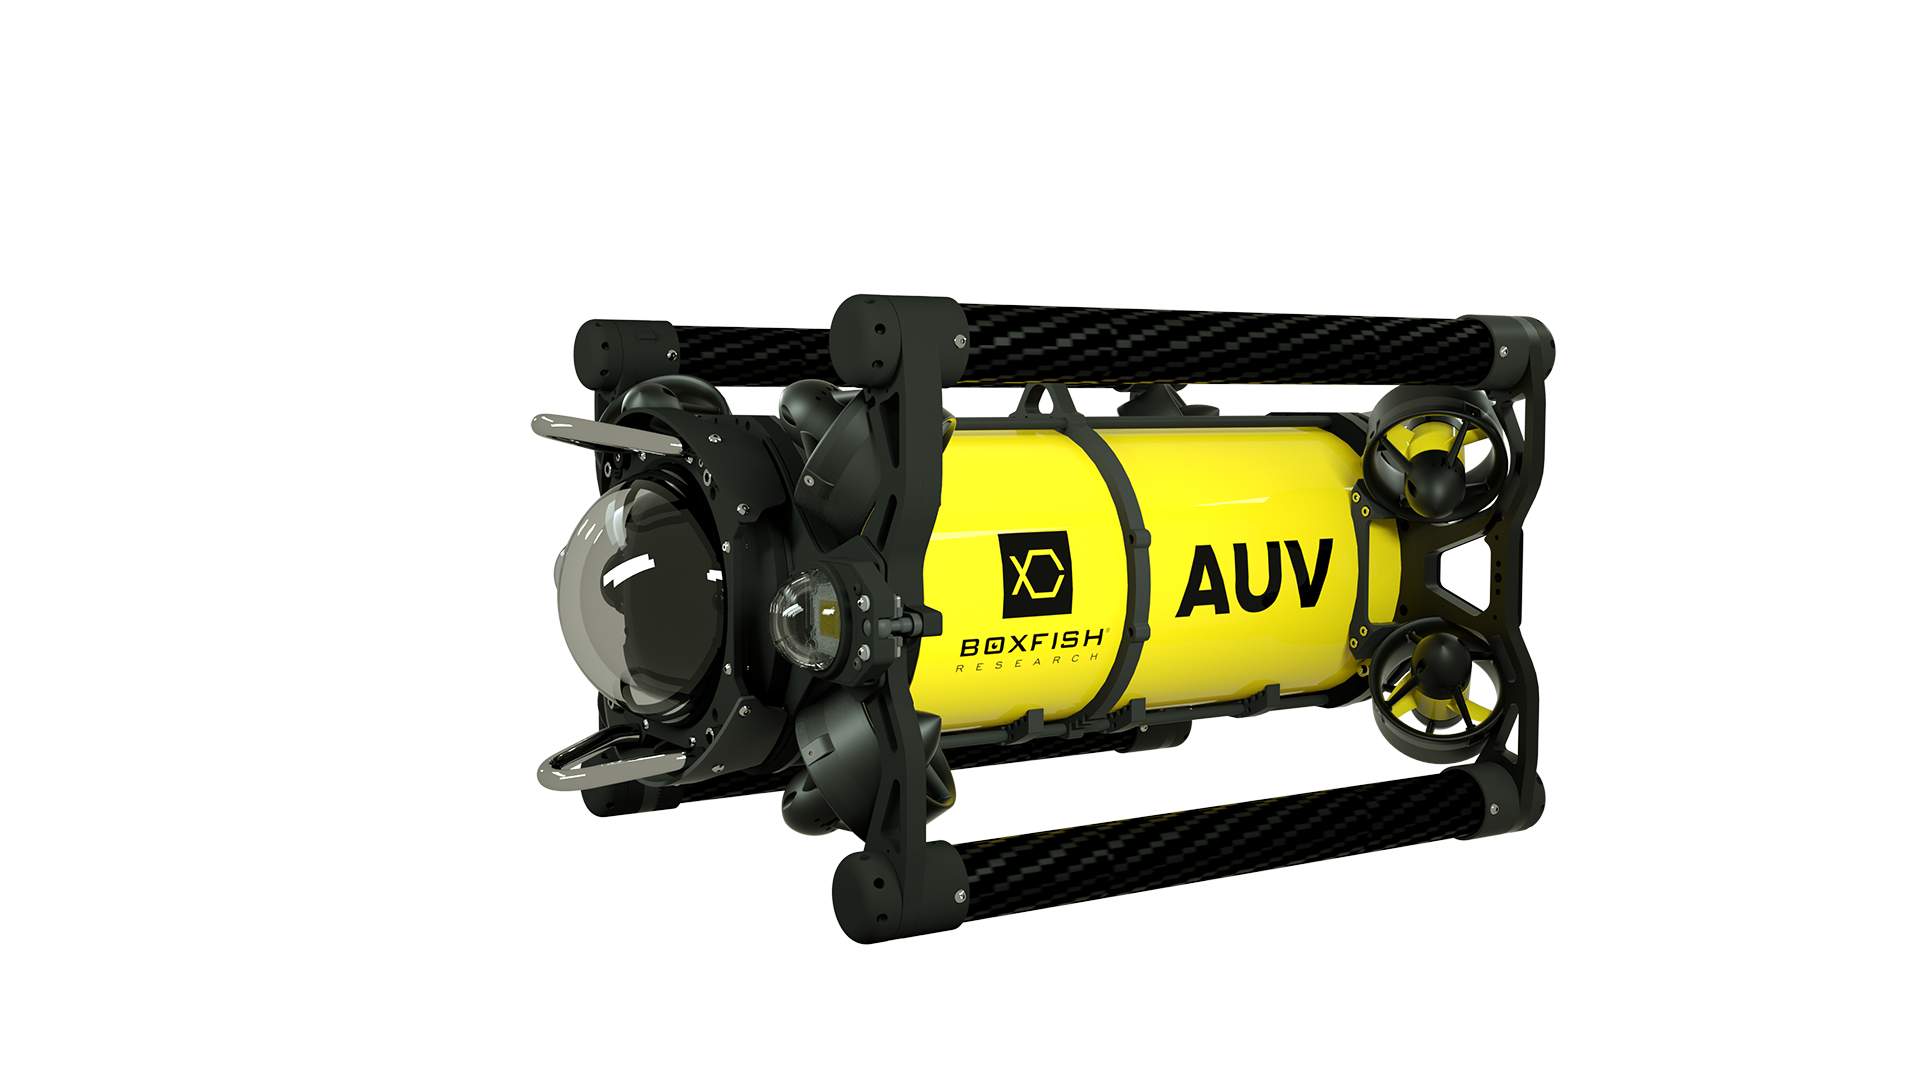 Boxfish AUV hovering AUV hybrid AUV